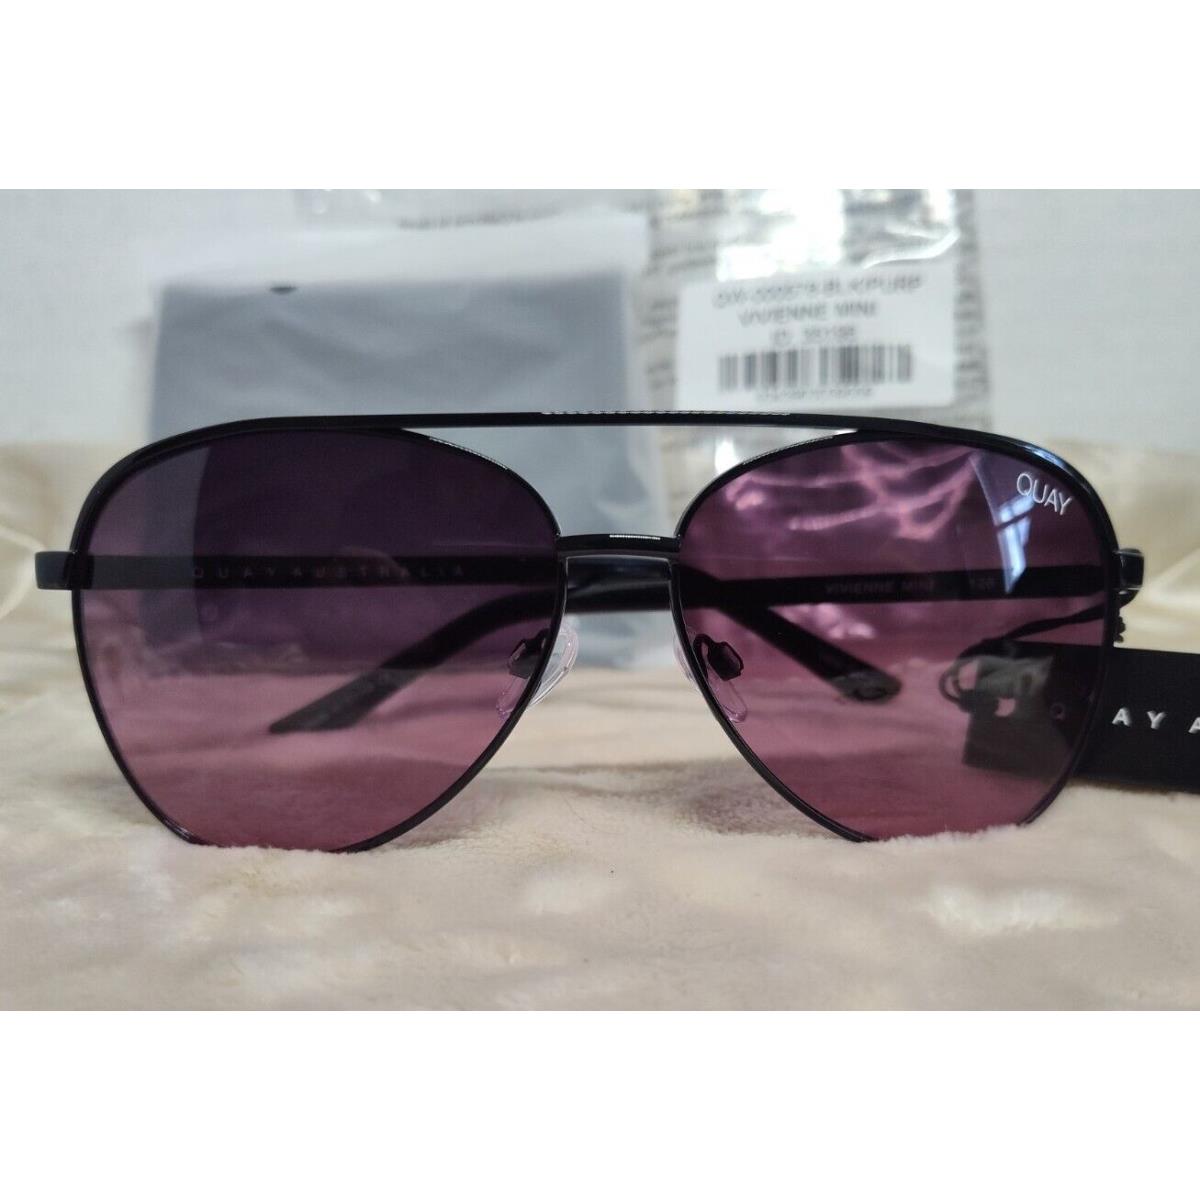 Quay Vivienne Mini Aviator Sunglasses Black Framepurple Lenses Popular